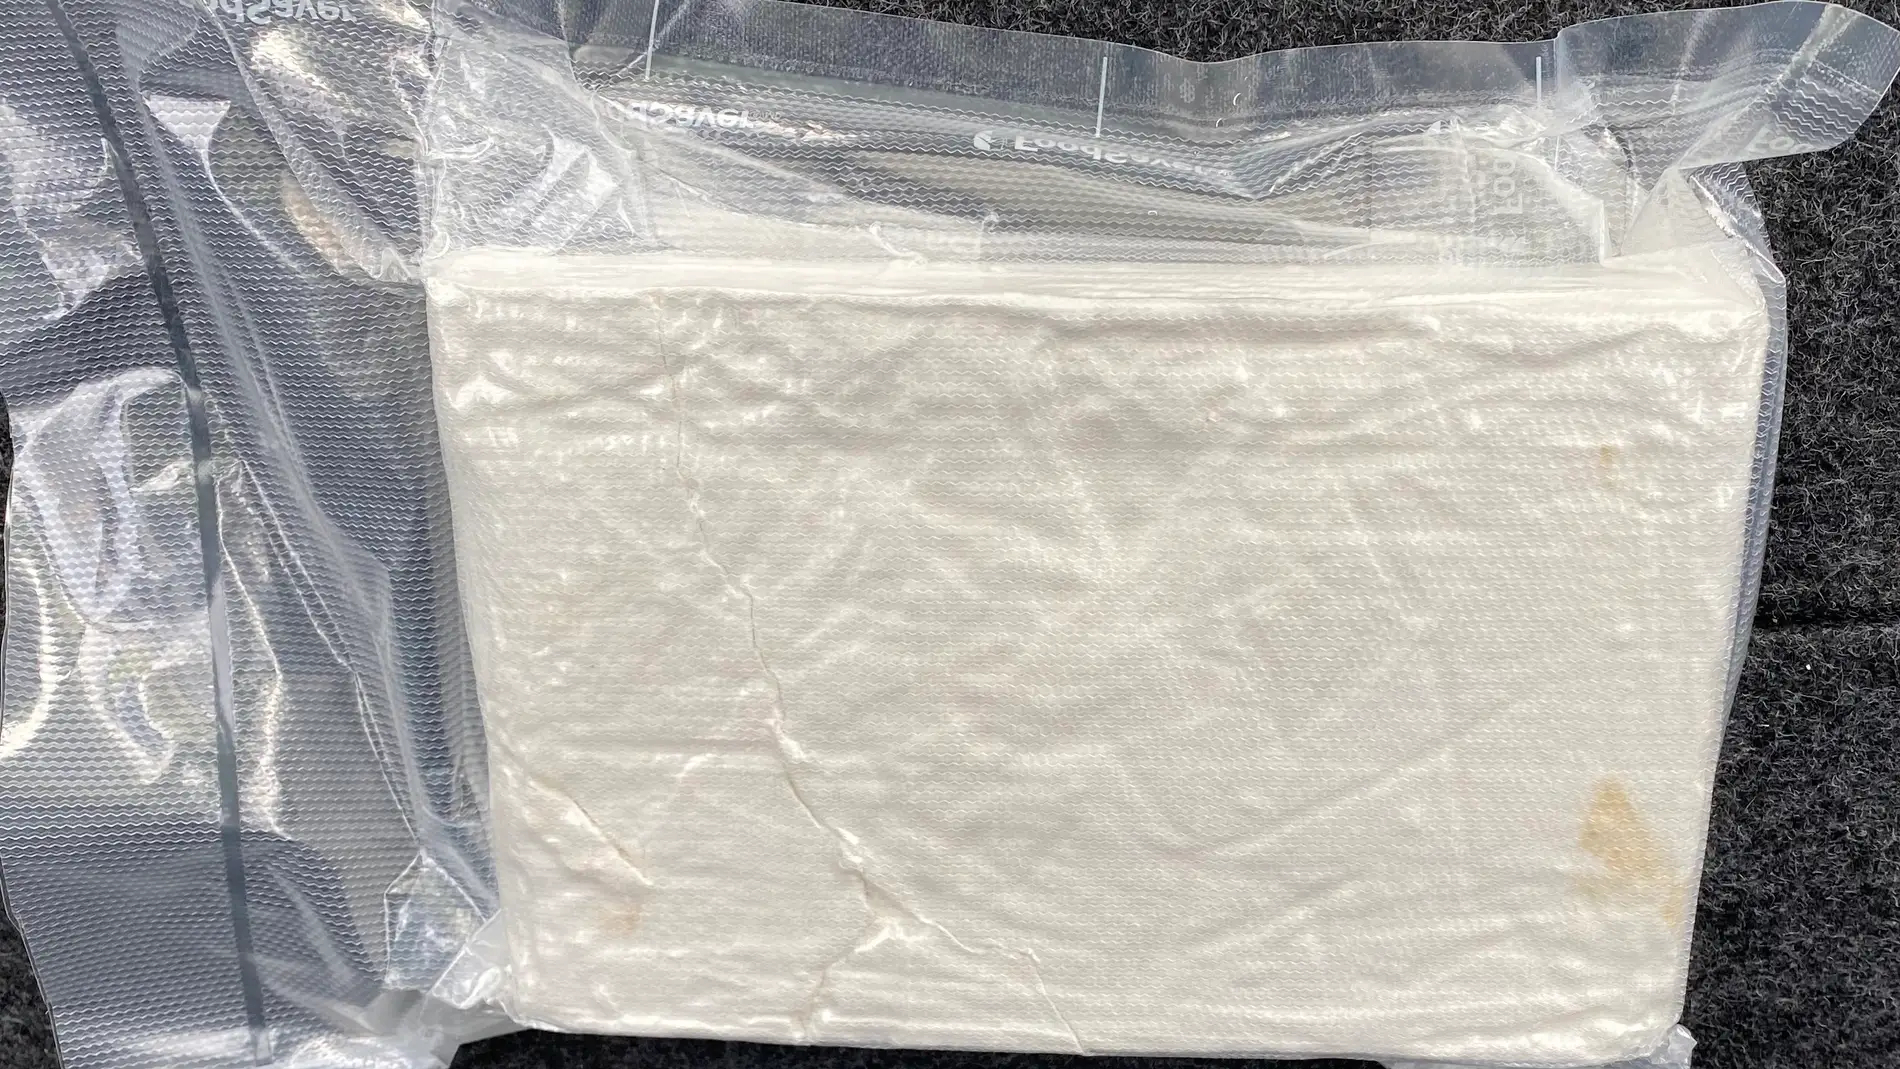 La Guardia Civil incauta más de 1 kilo de cocaína en la A-4